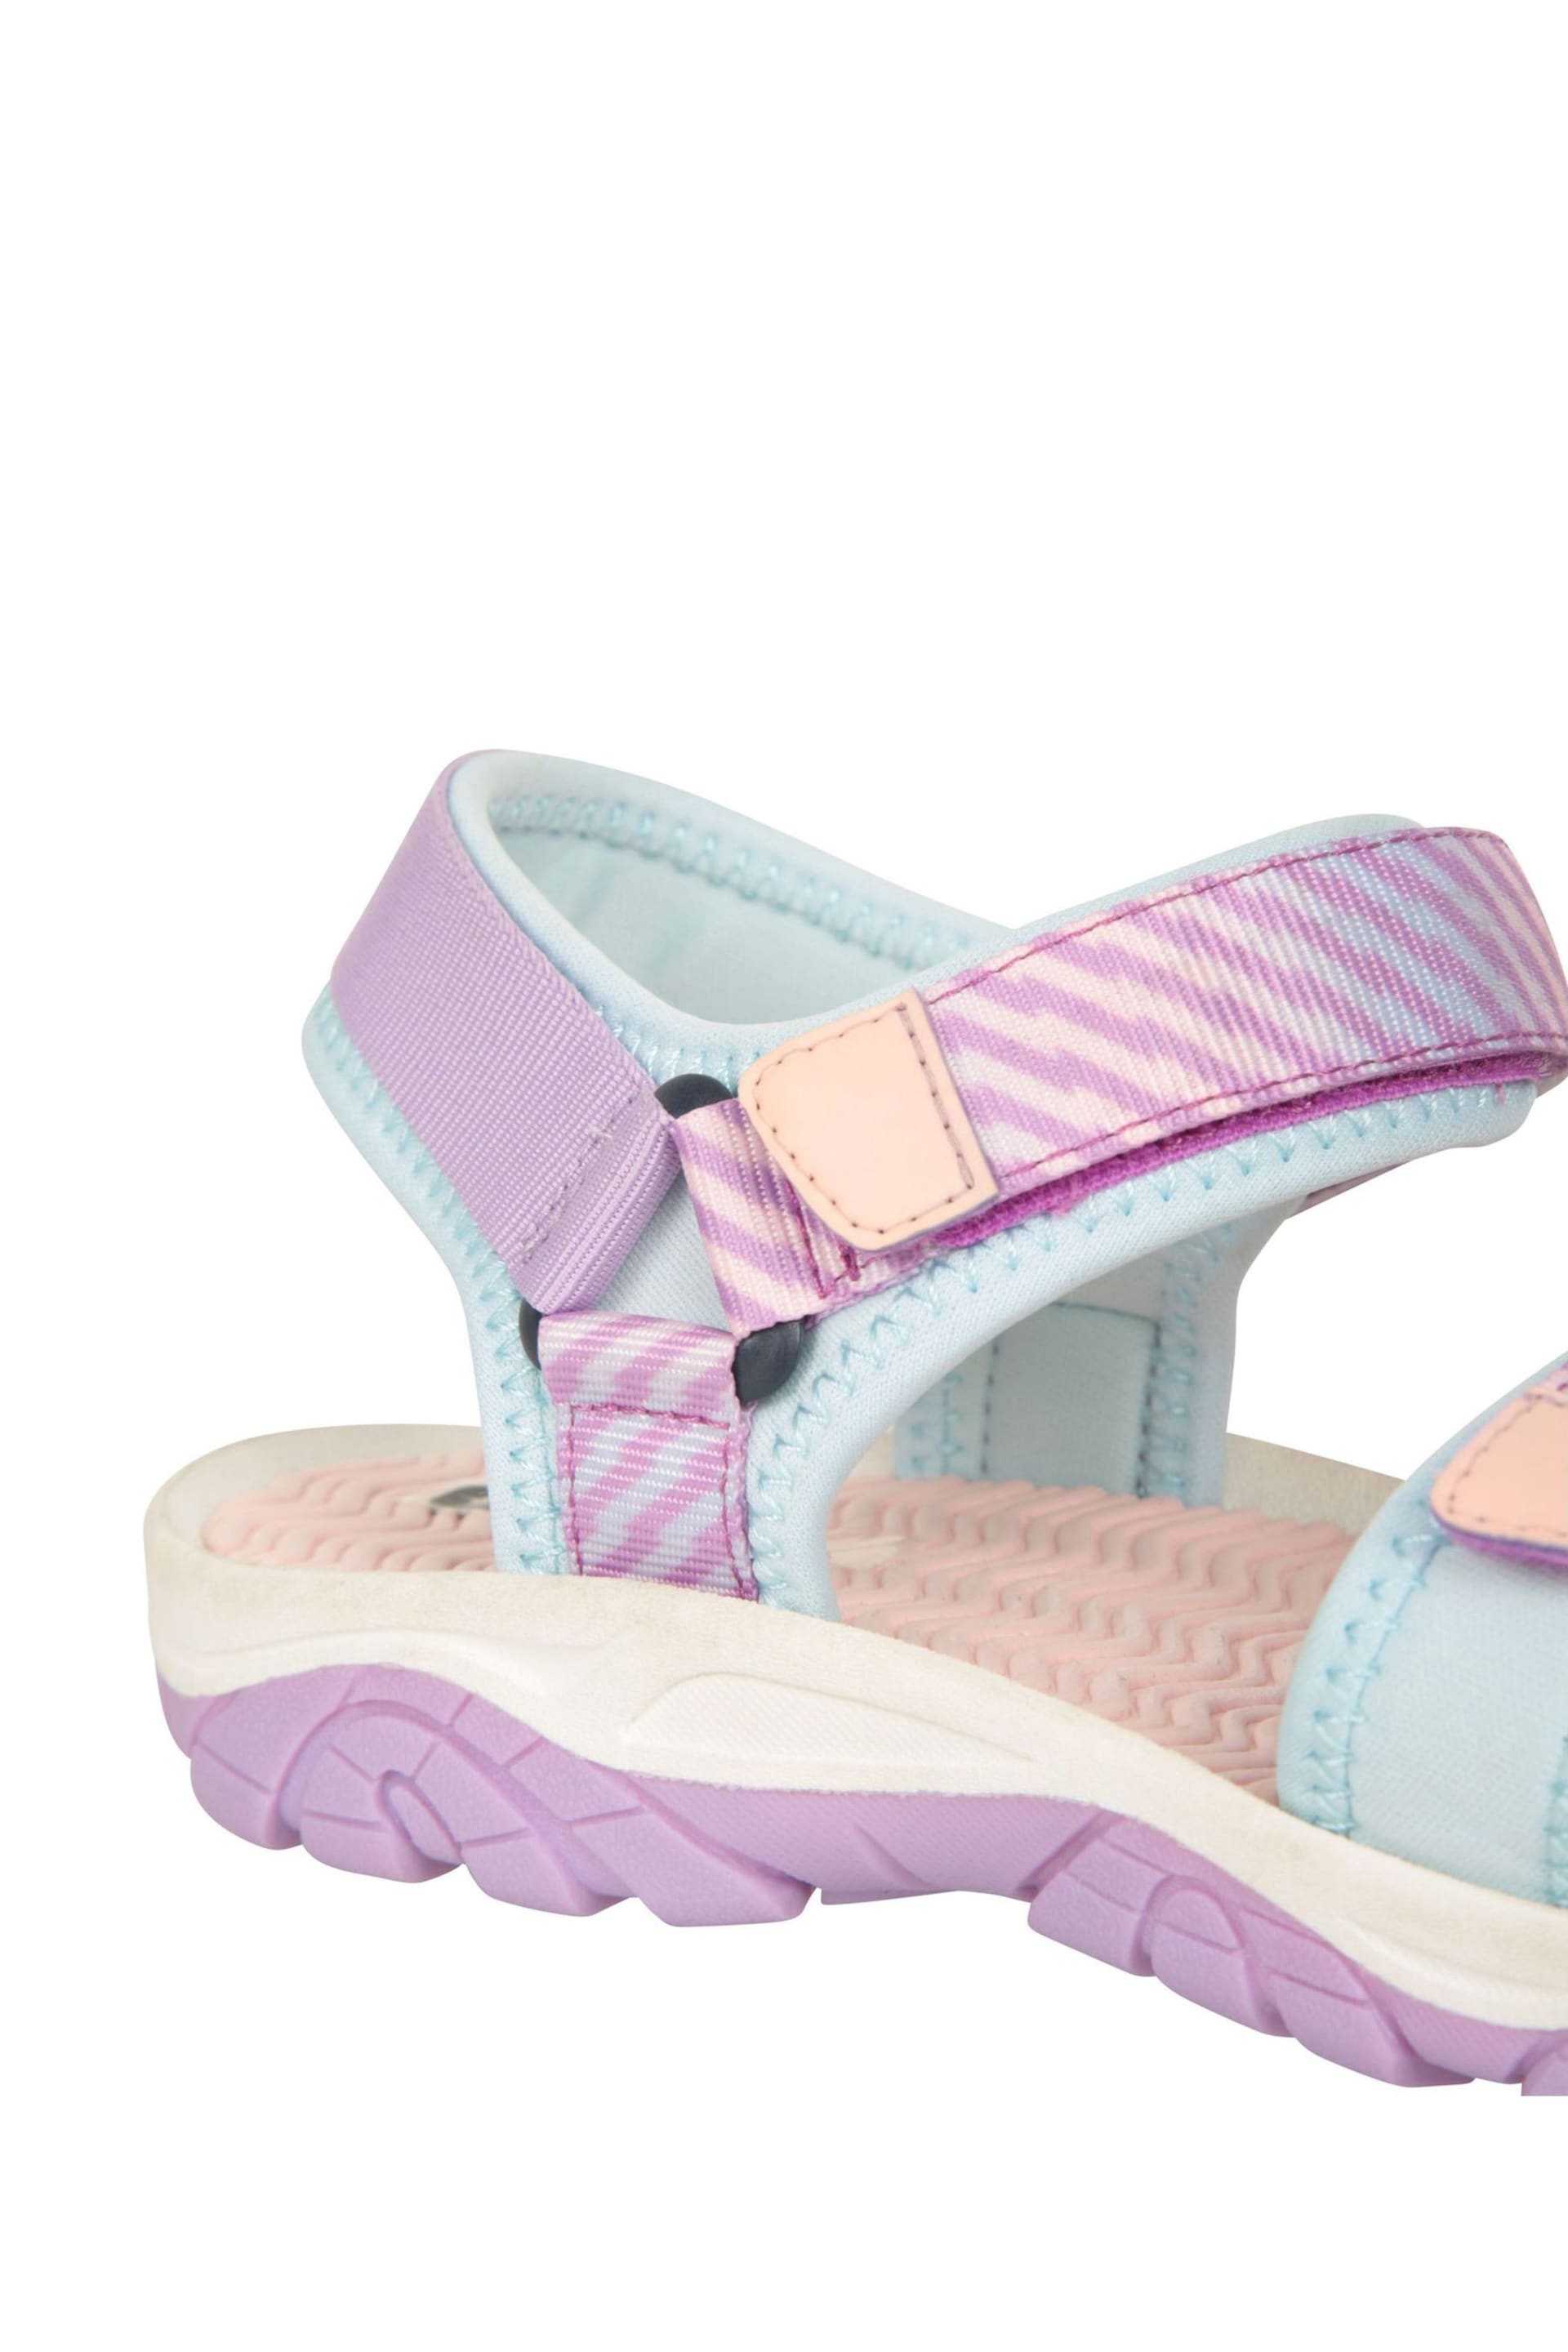 Mountain Warehouse Purple Kids 3-Strap Sandals - Image 7 of 8